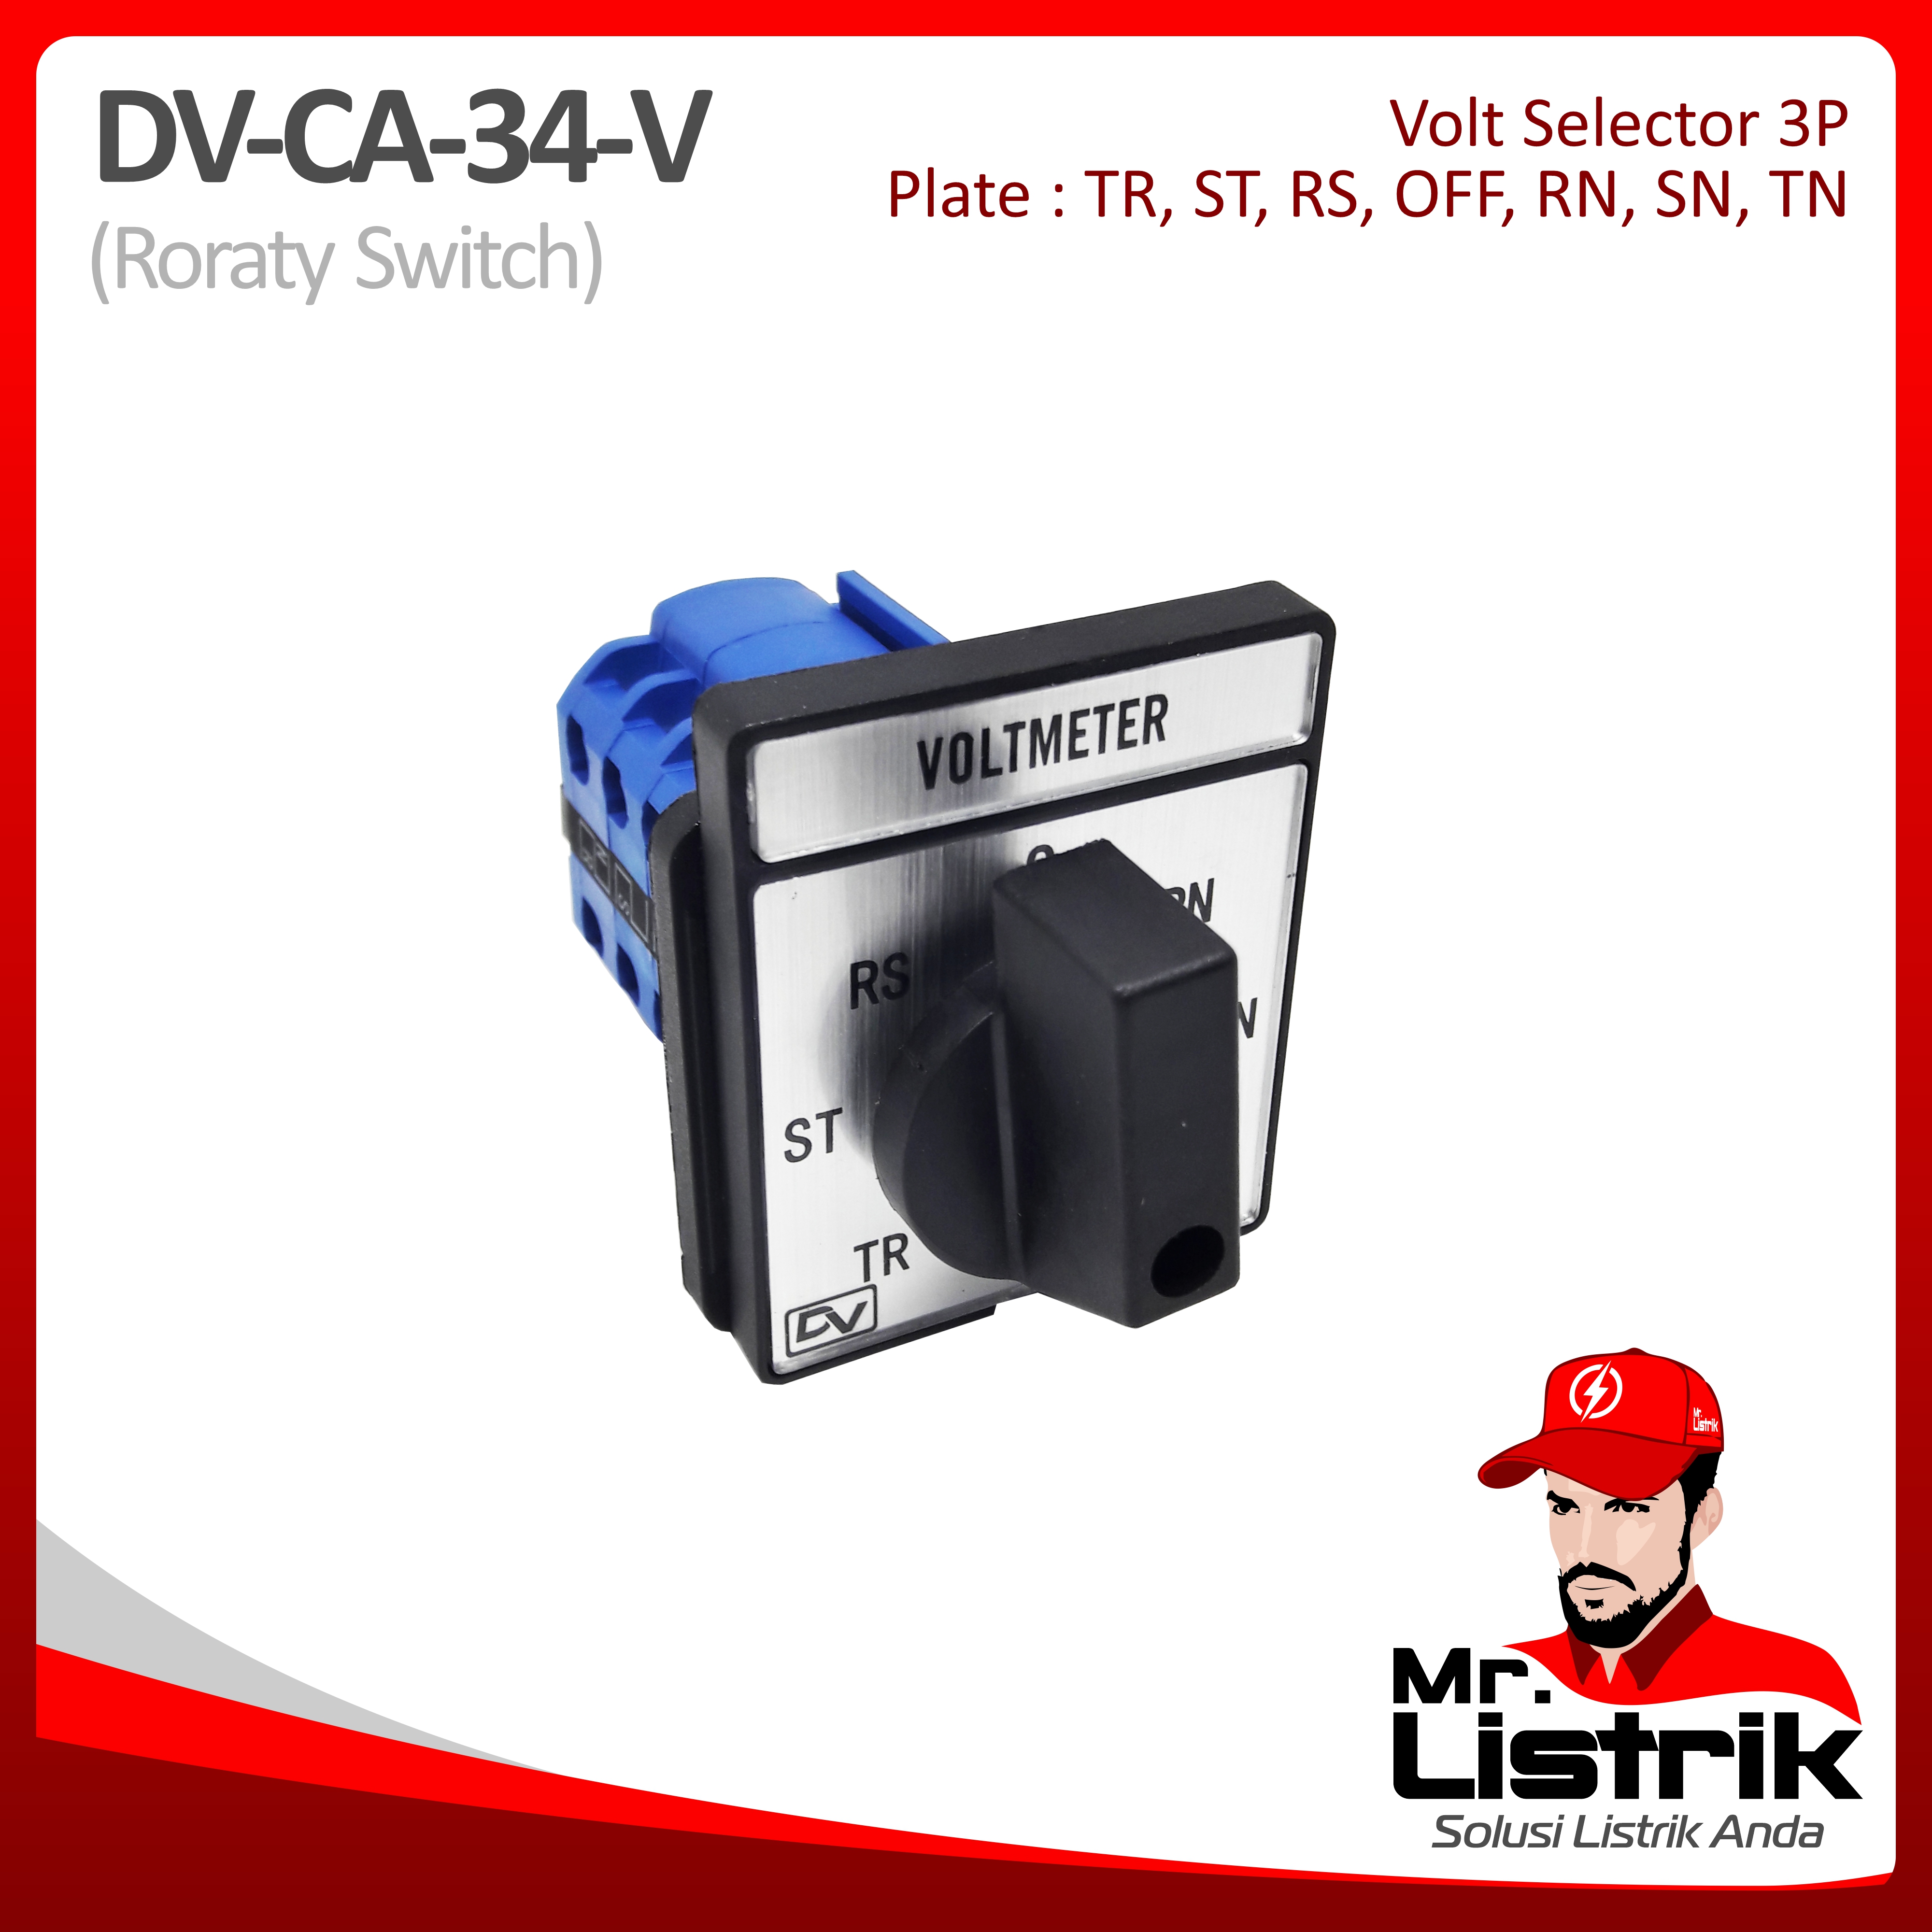 Rotary Switch Volt Selector 3P DV CA-34-V